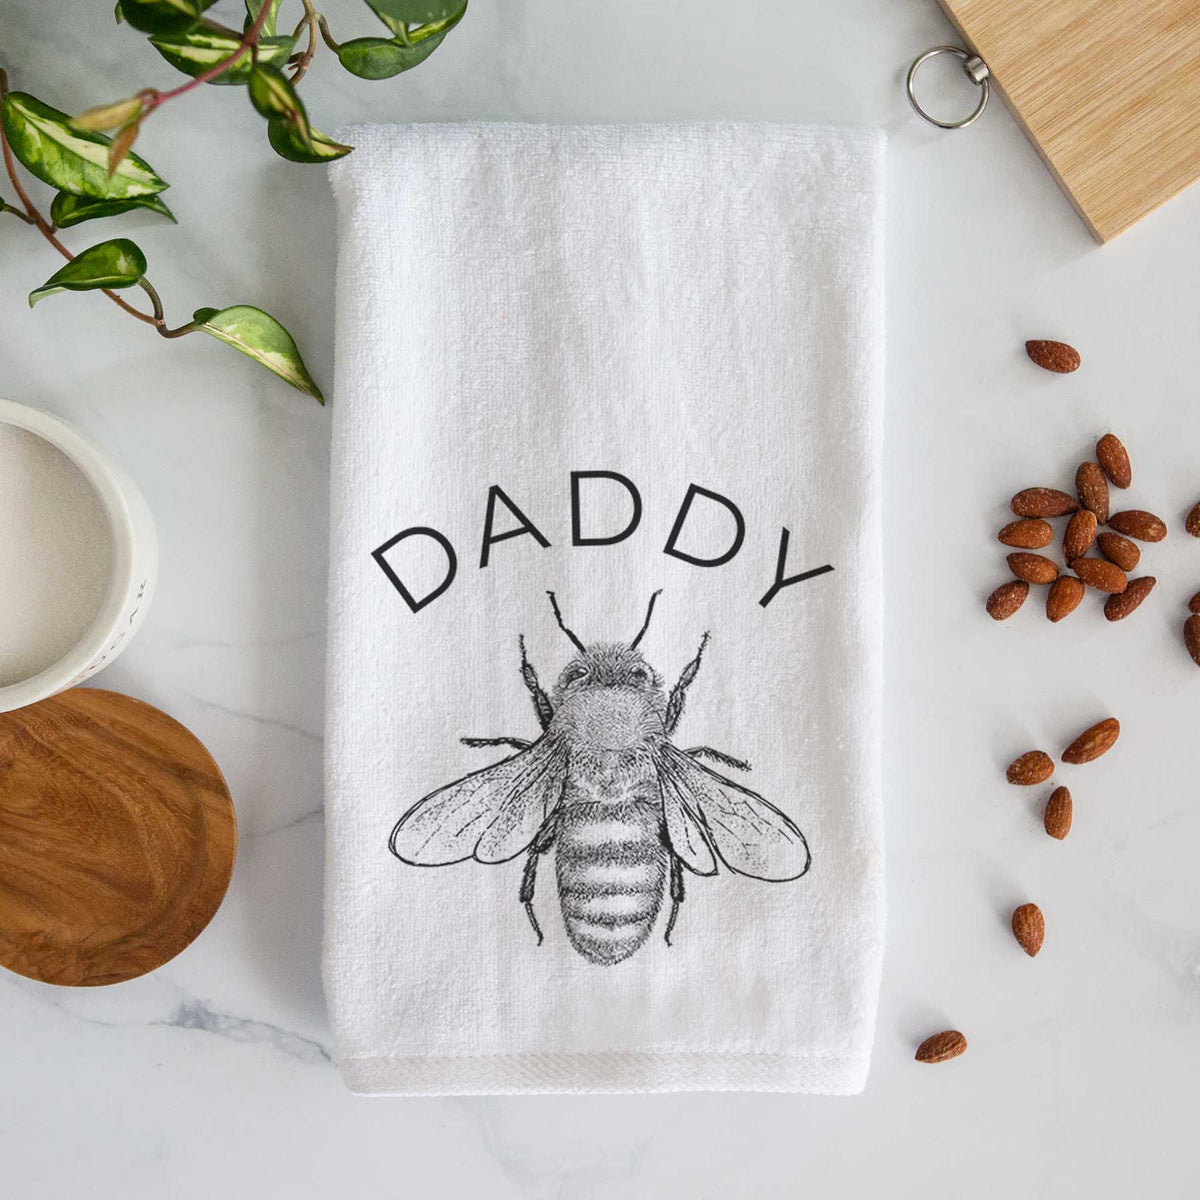 Daddy Bee Hand Towel